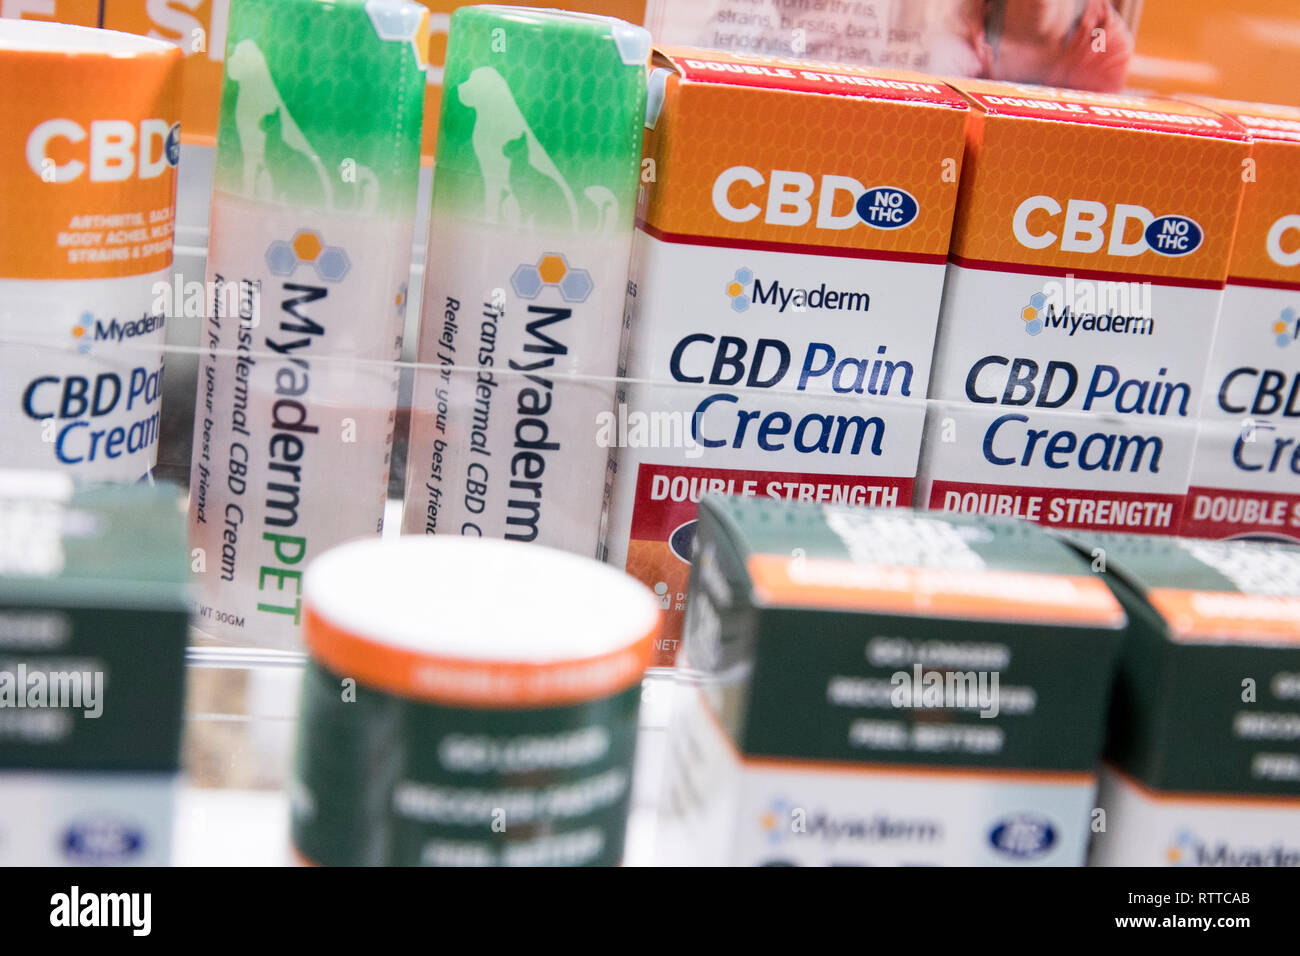 Bottles of Myaderm CBD (Cannabidiol) pain cream treatment products photographed in a pharmacy. Stock Photo